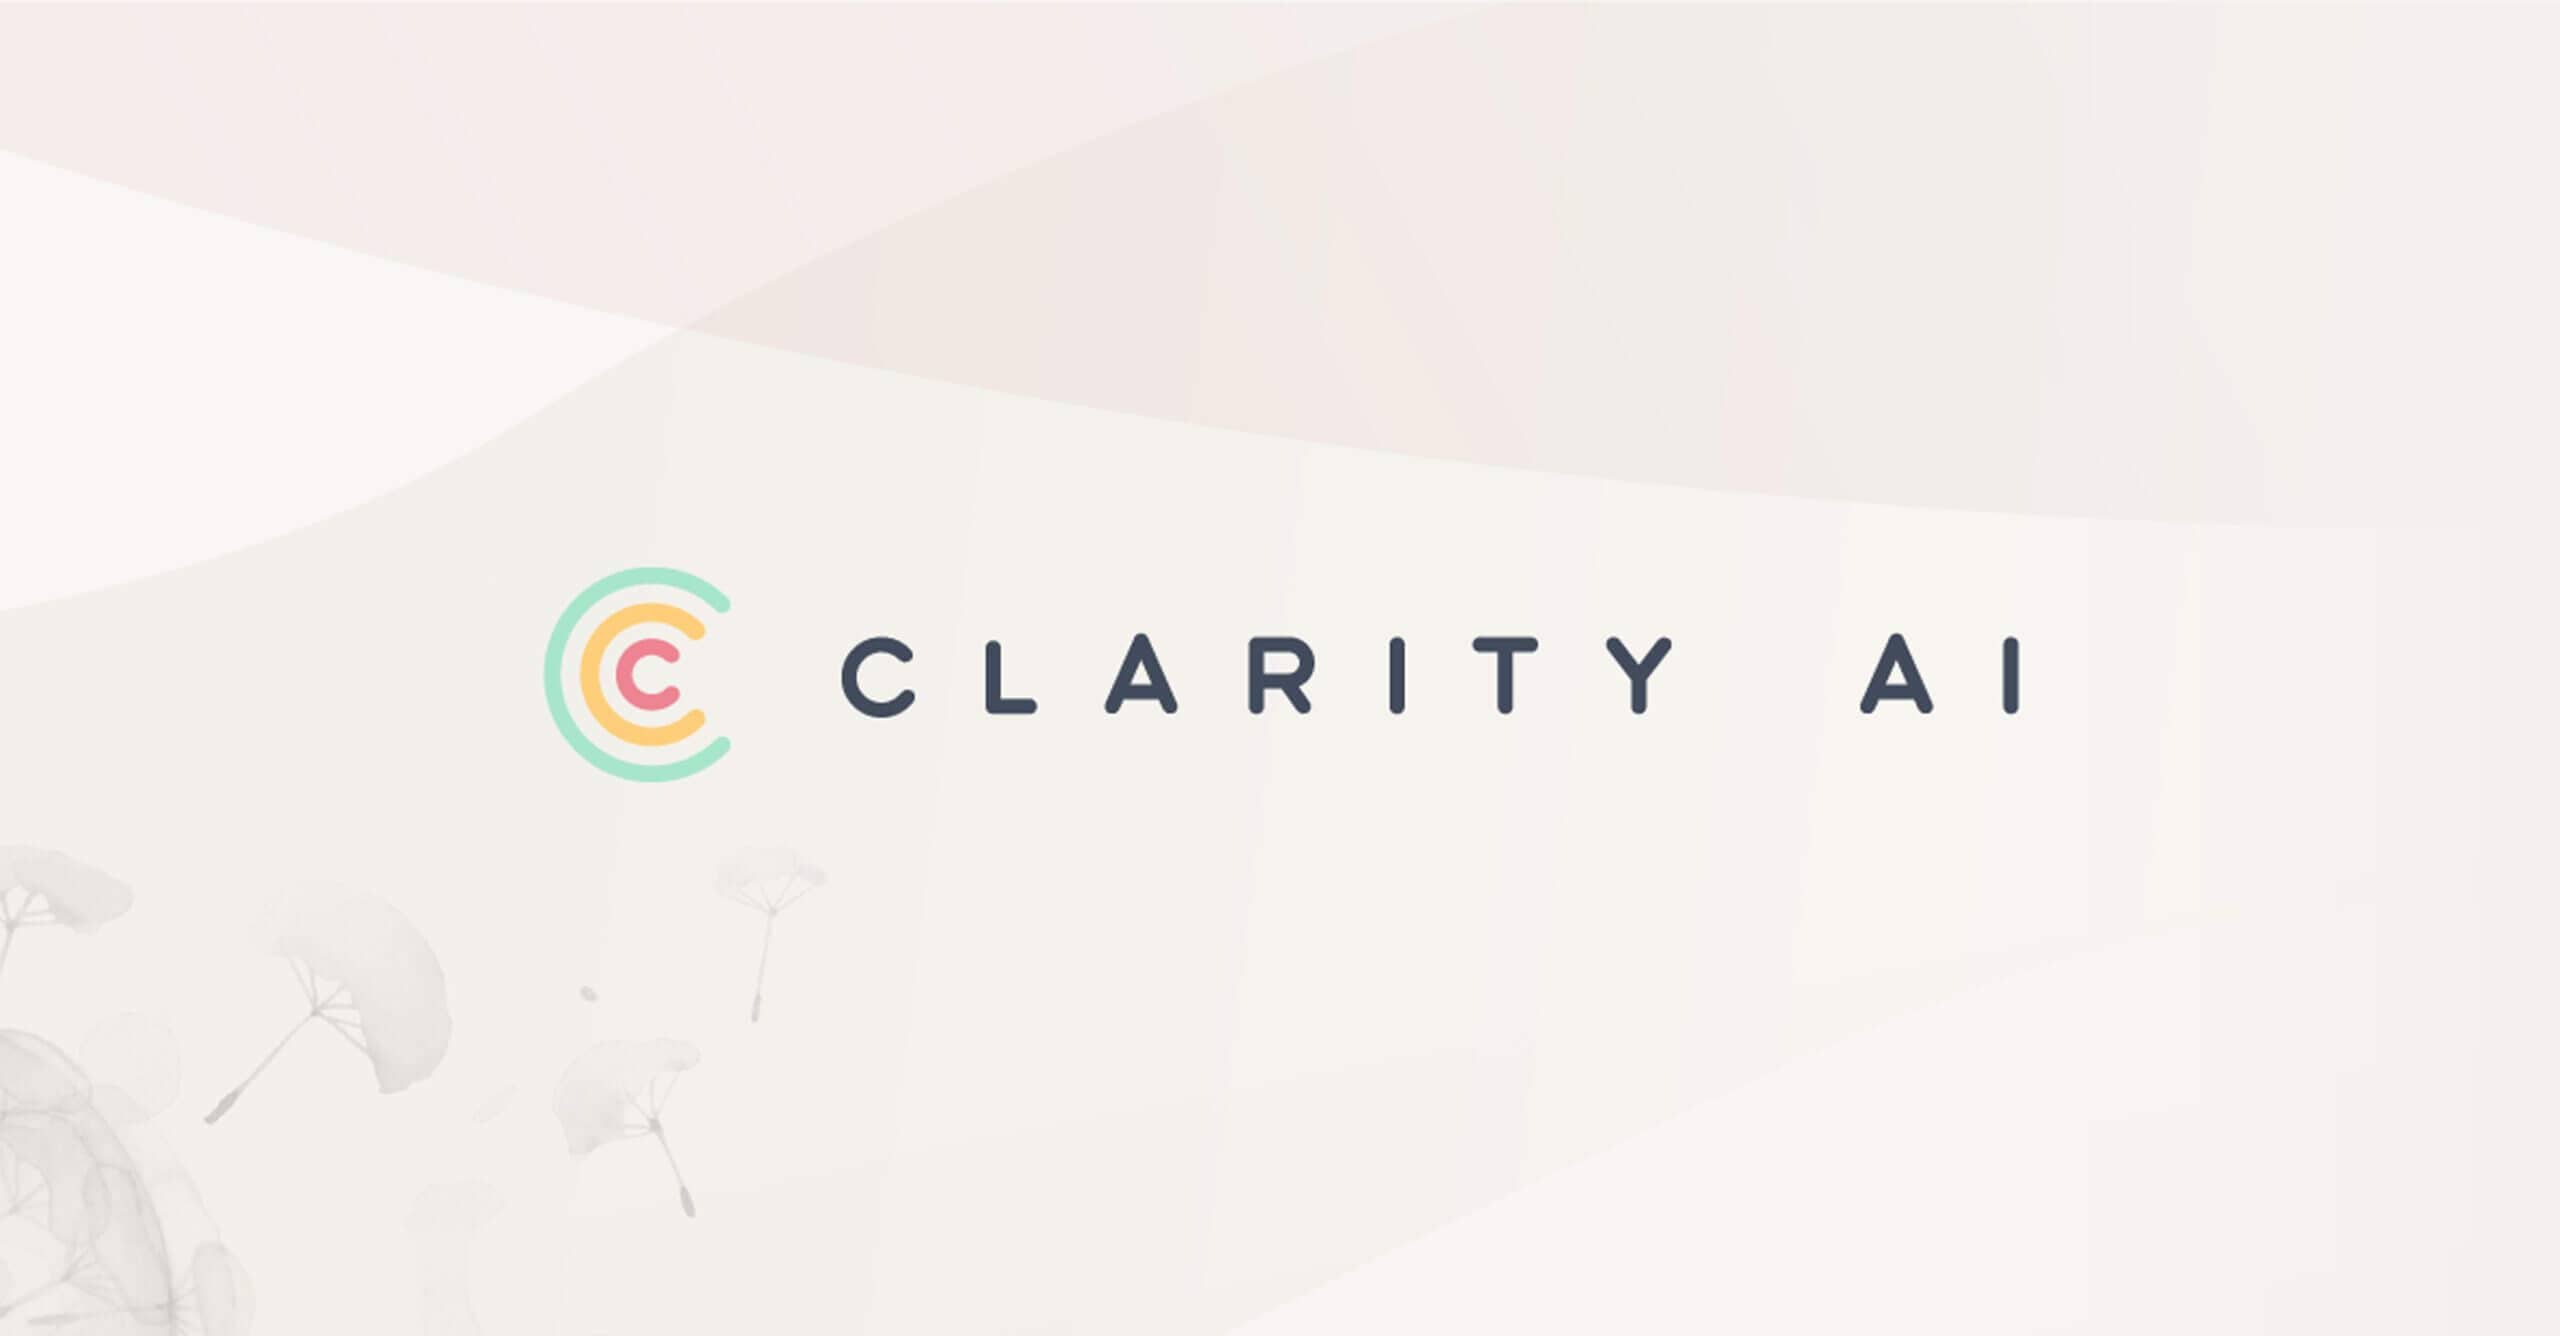 (c) Clarity.ai